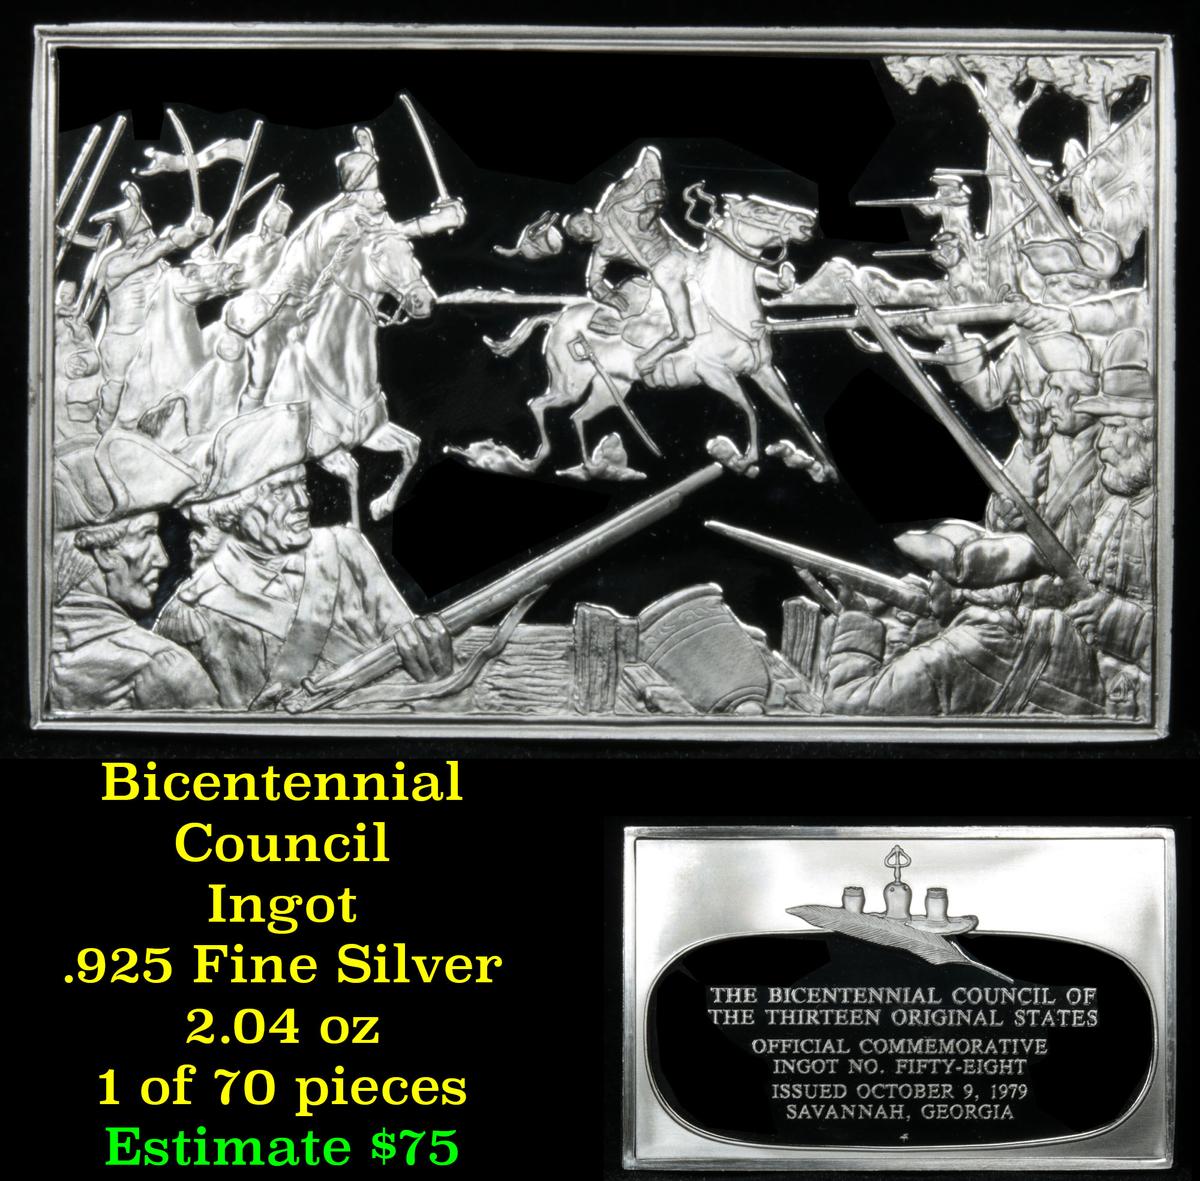 Bicentennial Council 13 orig States #58, Fail To Recapture Savannah - 1.84 oz  silver